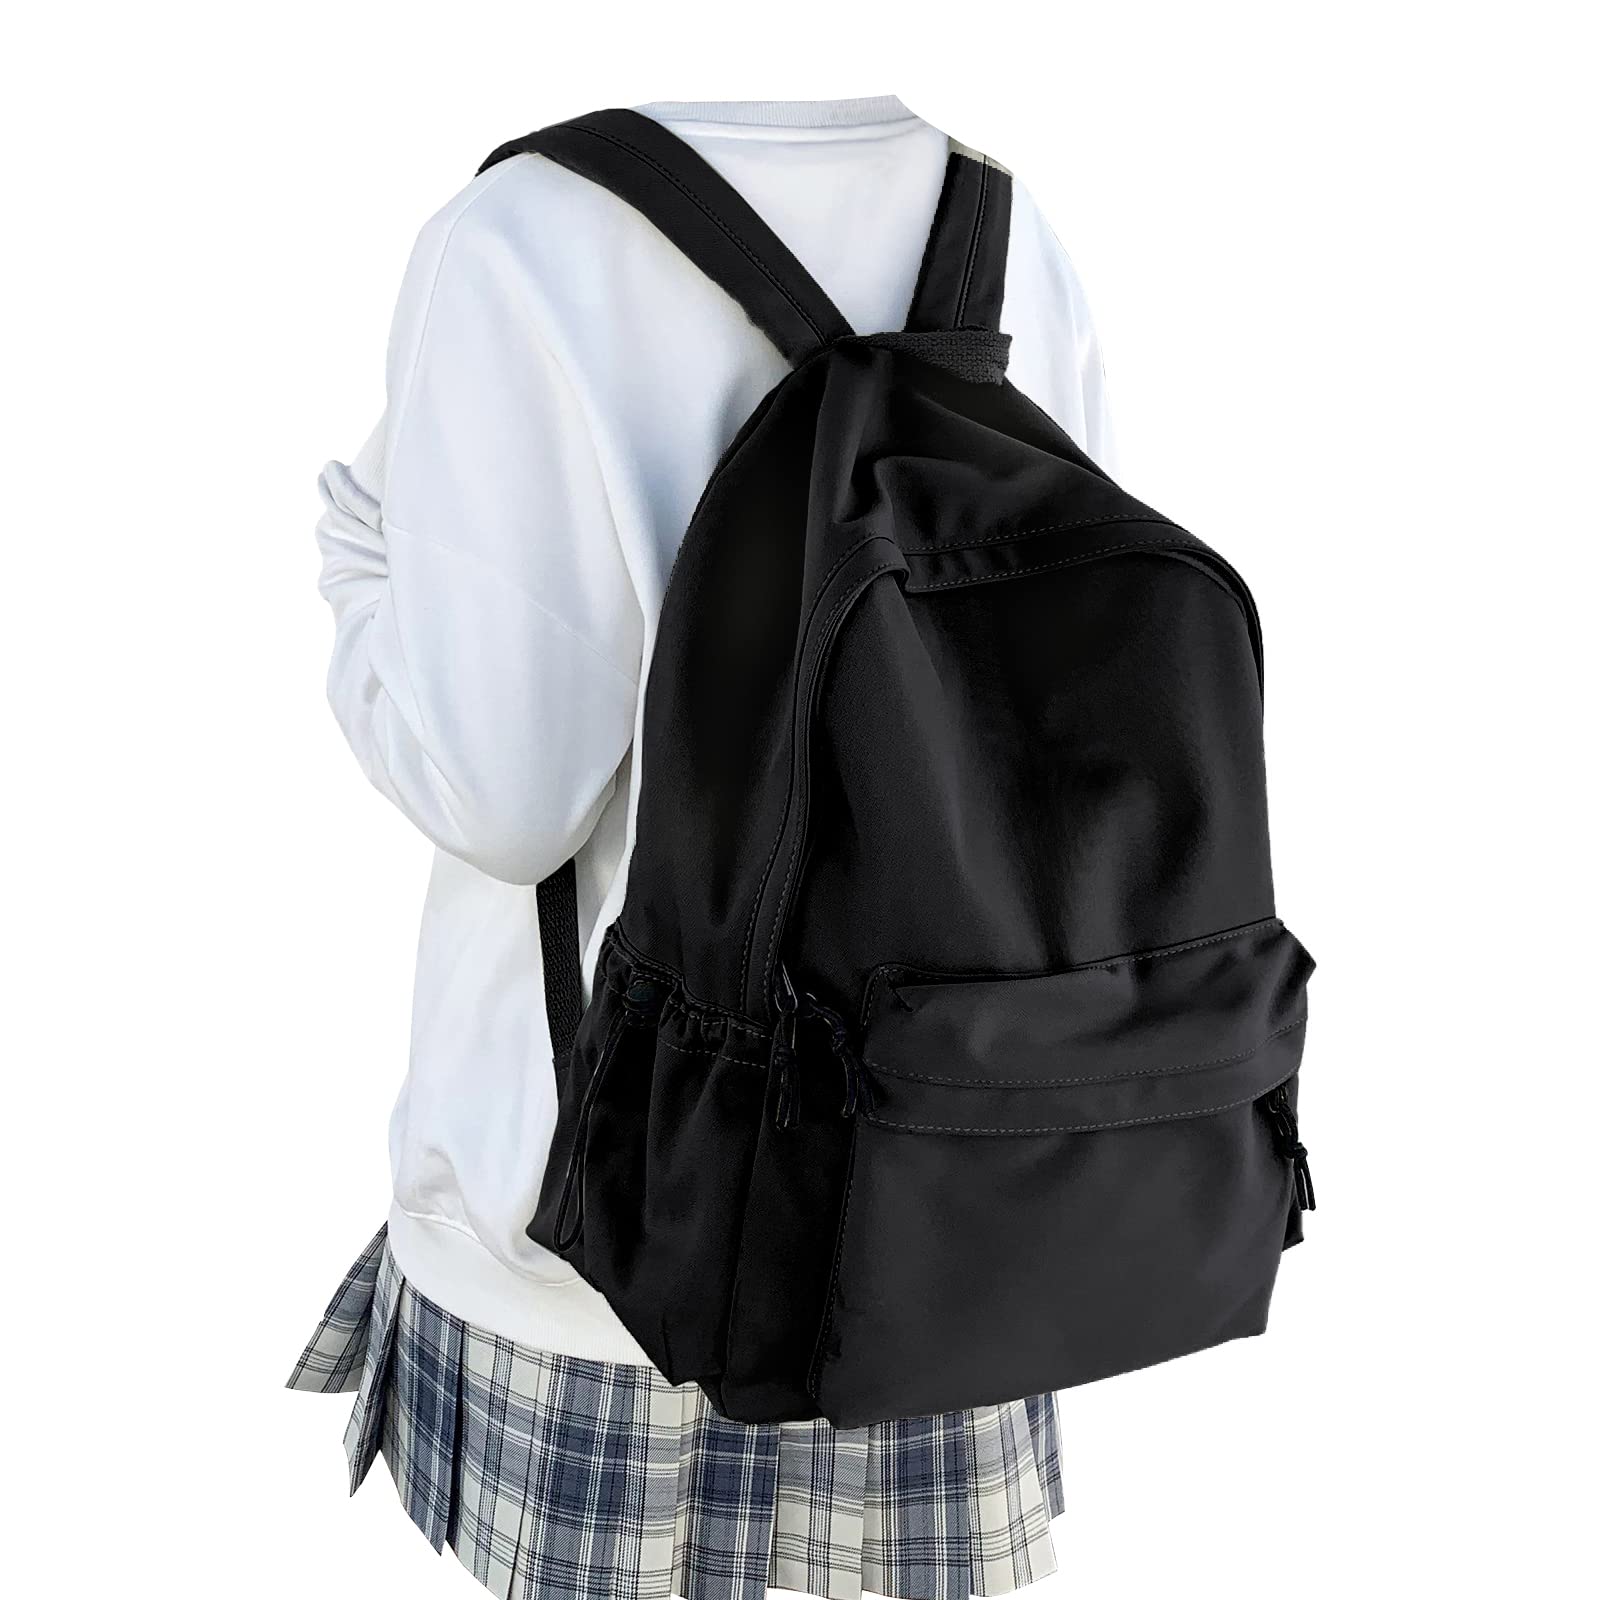 WEPOET Classic Basic Black Backpack For Women,Waterproof High School Bookbag,Lightweight Casual Travel Daypack,College Backpack Men,Middle School Bag For Girls Boys